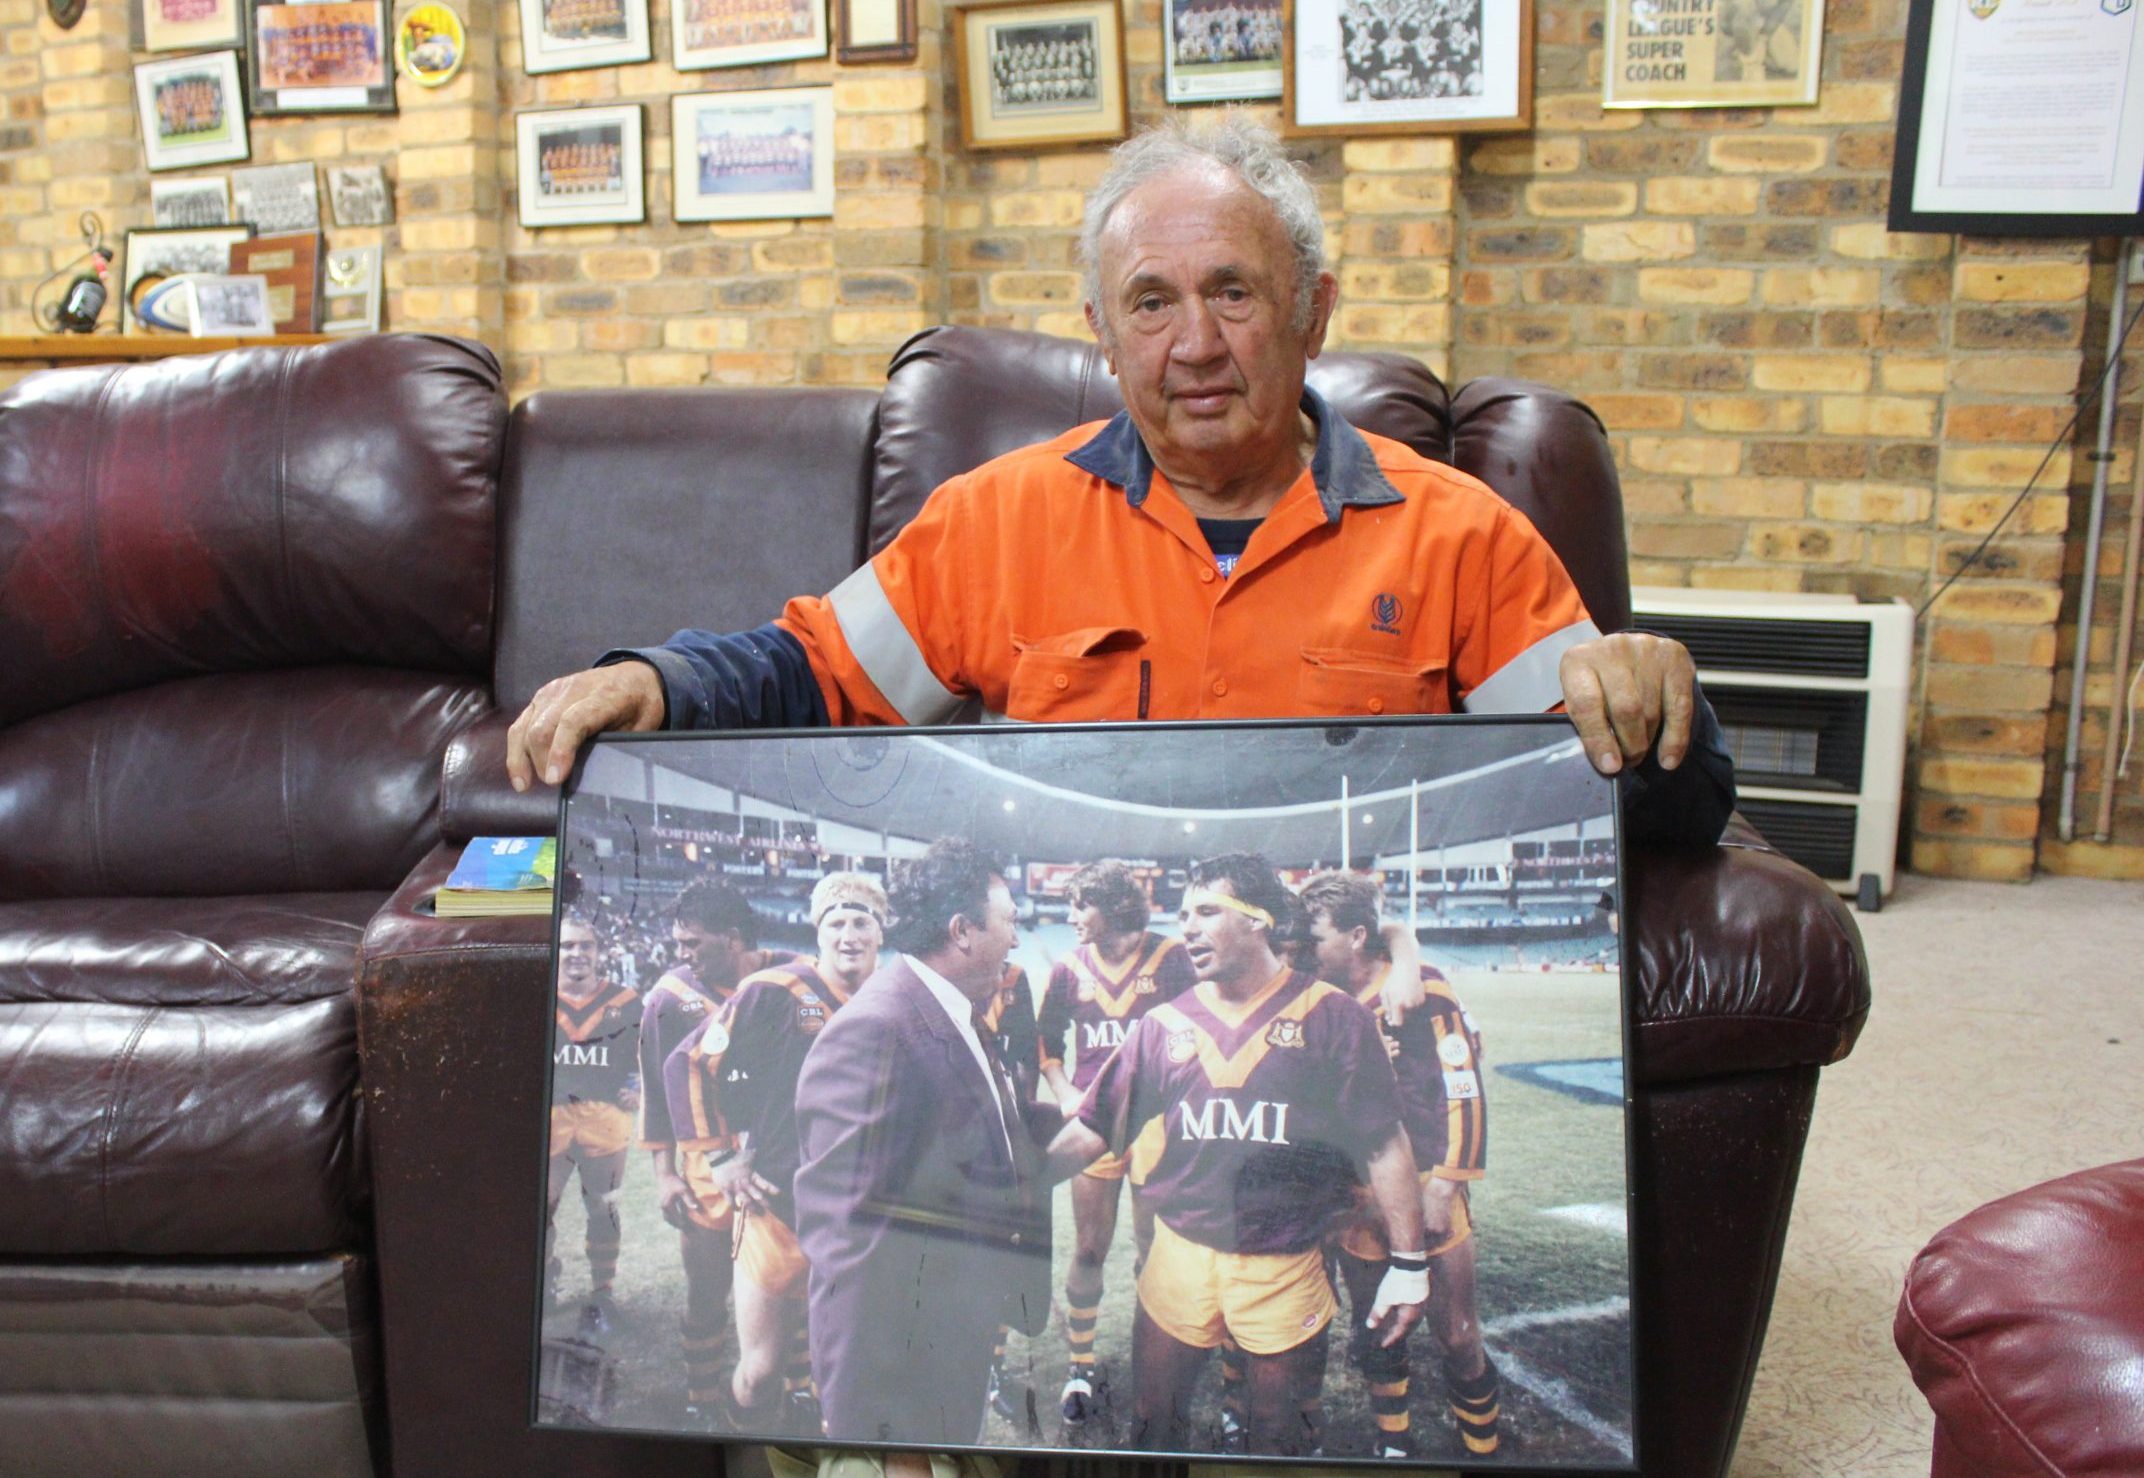 Narrabri Blues legend Frank Fish awarded NSW Rugby League life membership